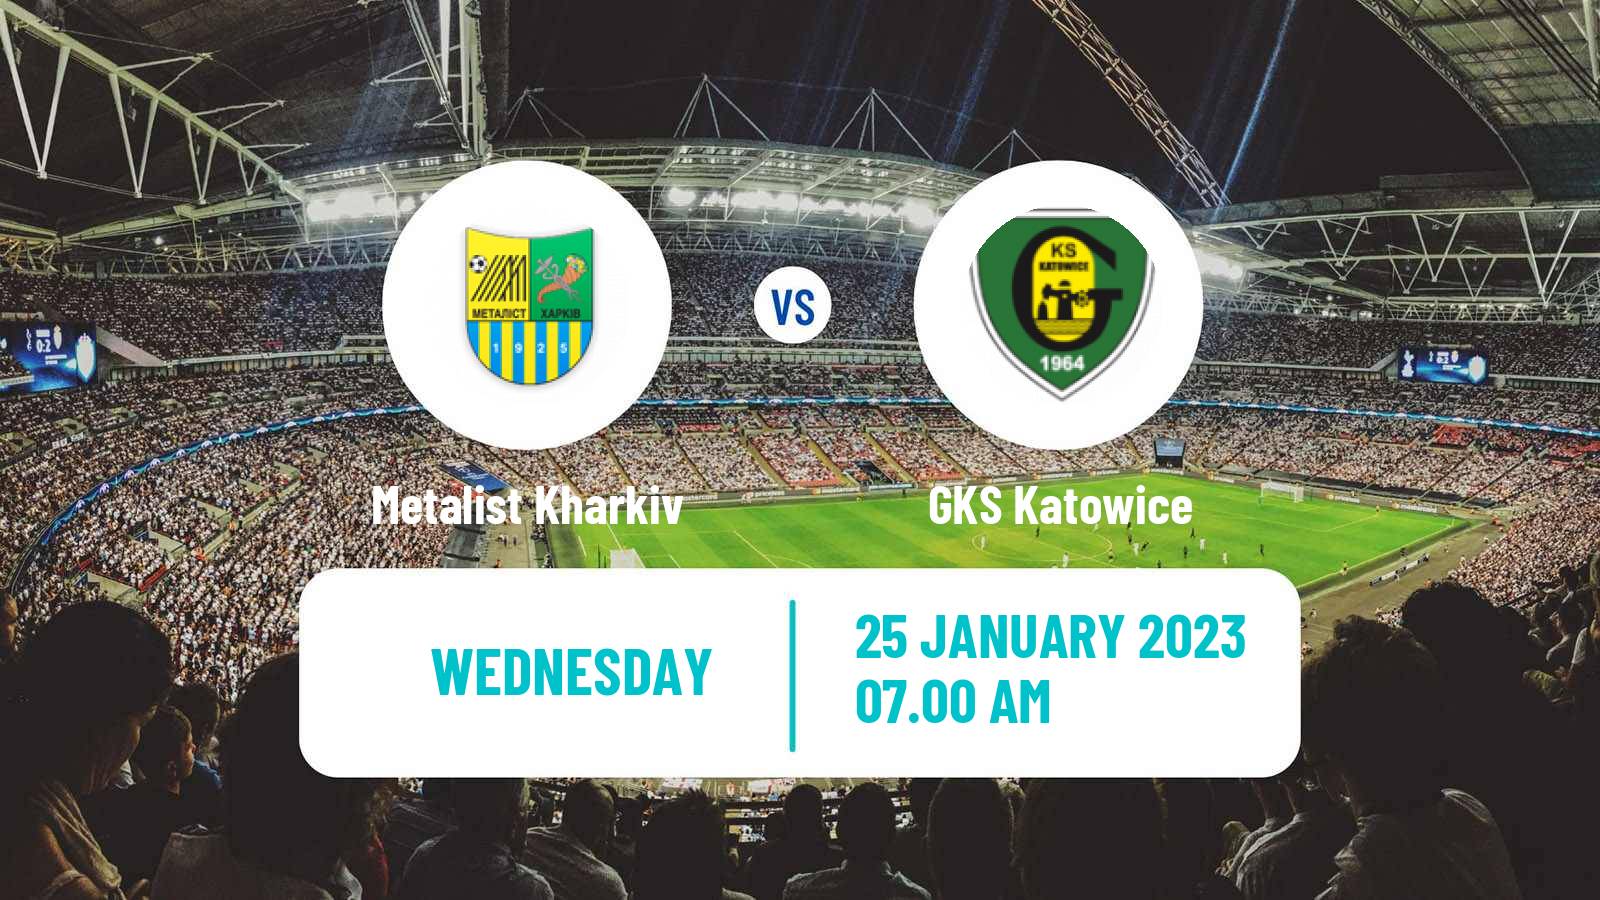 Soccer Club Friendly Metalist Kharkiv - GKS Katowice